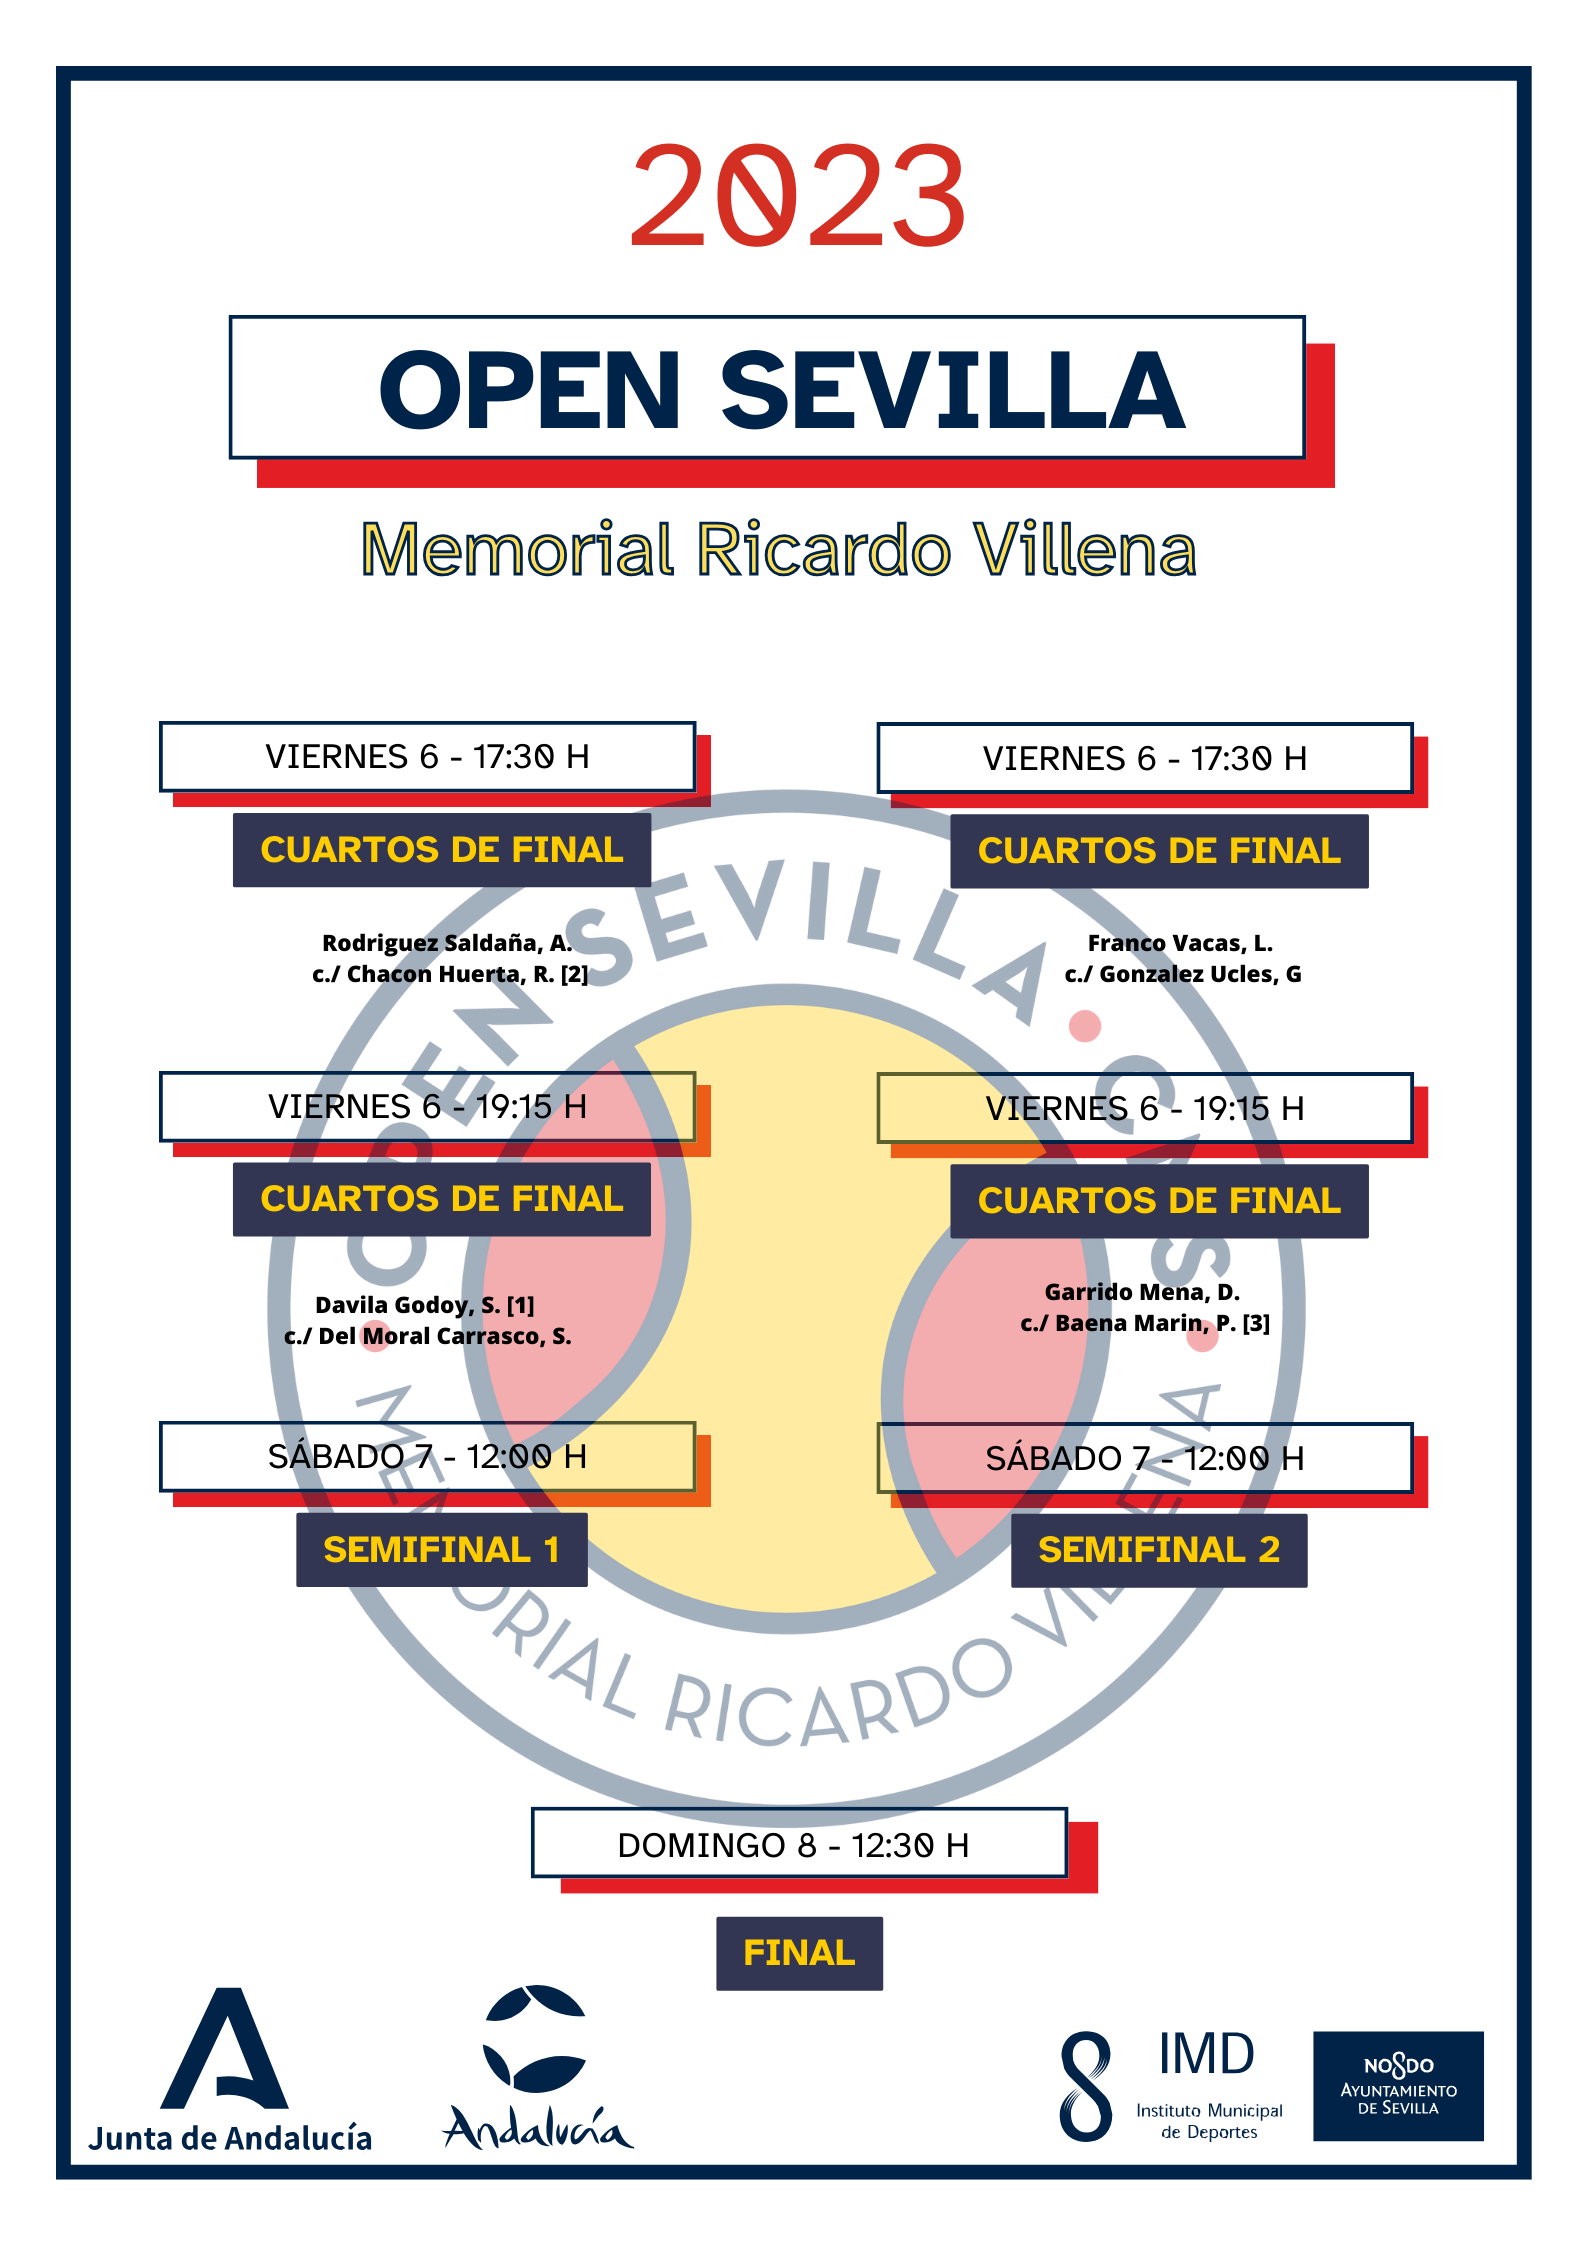 Open Sevilla de tenis Memorial Ricardo Villena